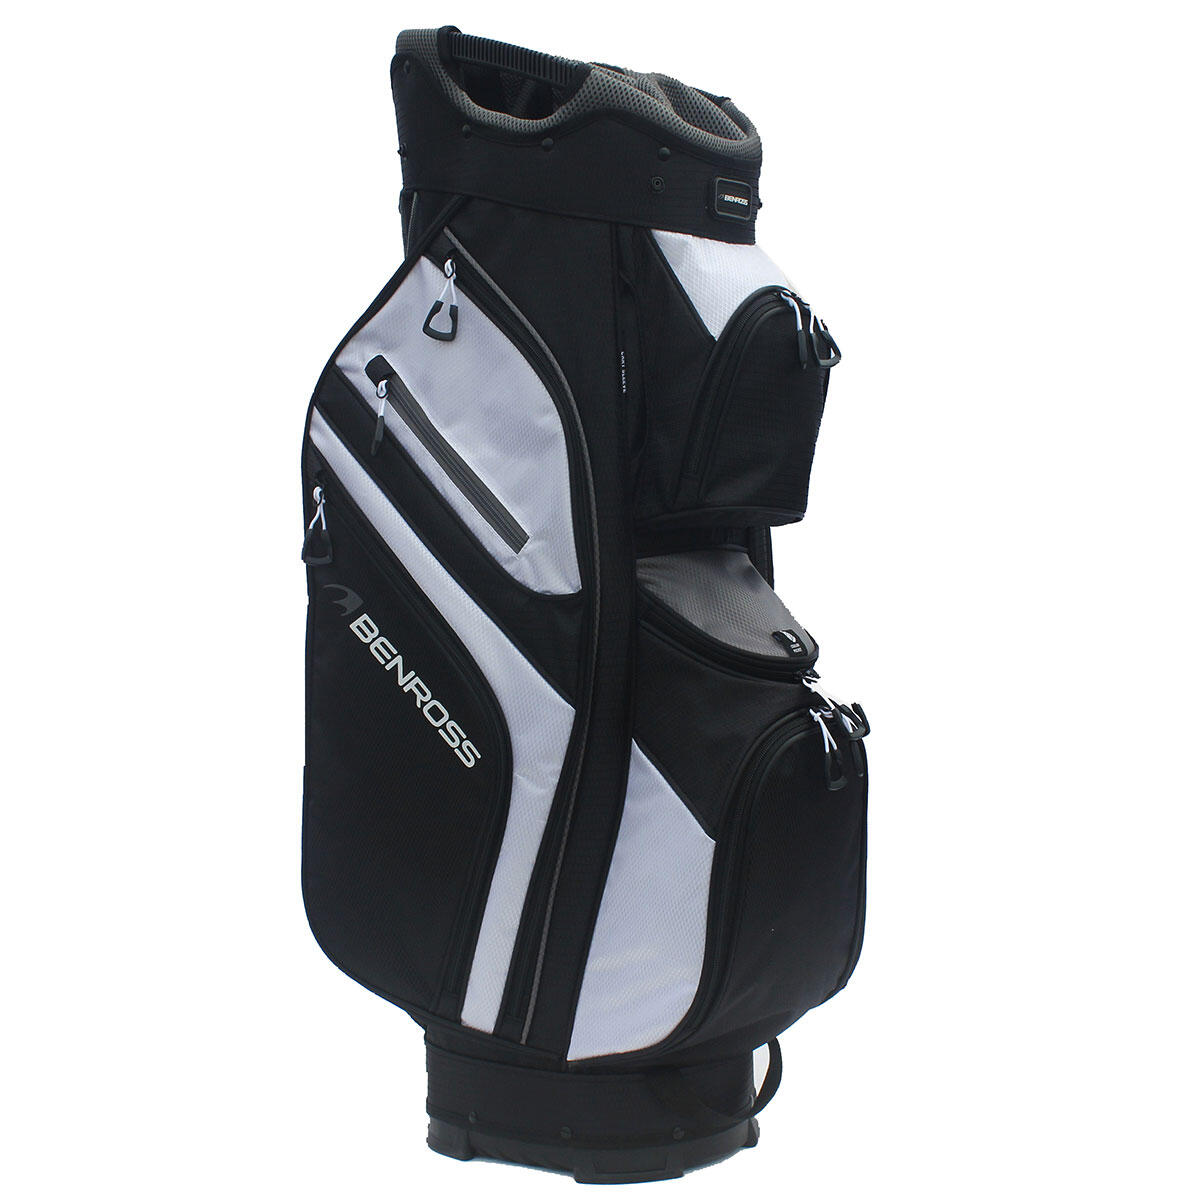 Benross PROTEC 2.0 Deluxe Golf Cart Bag 2/4